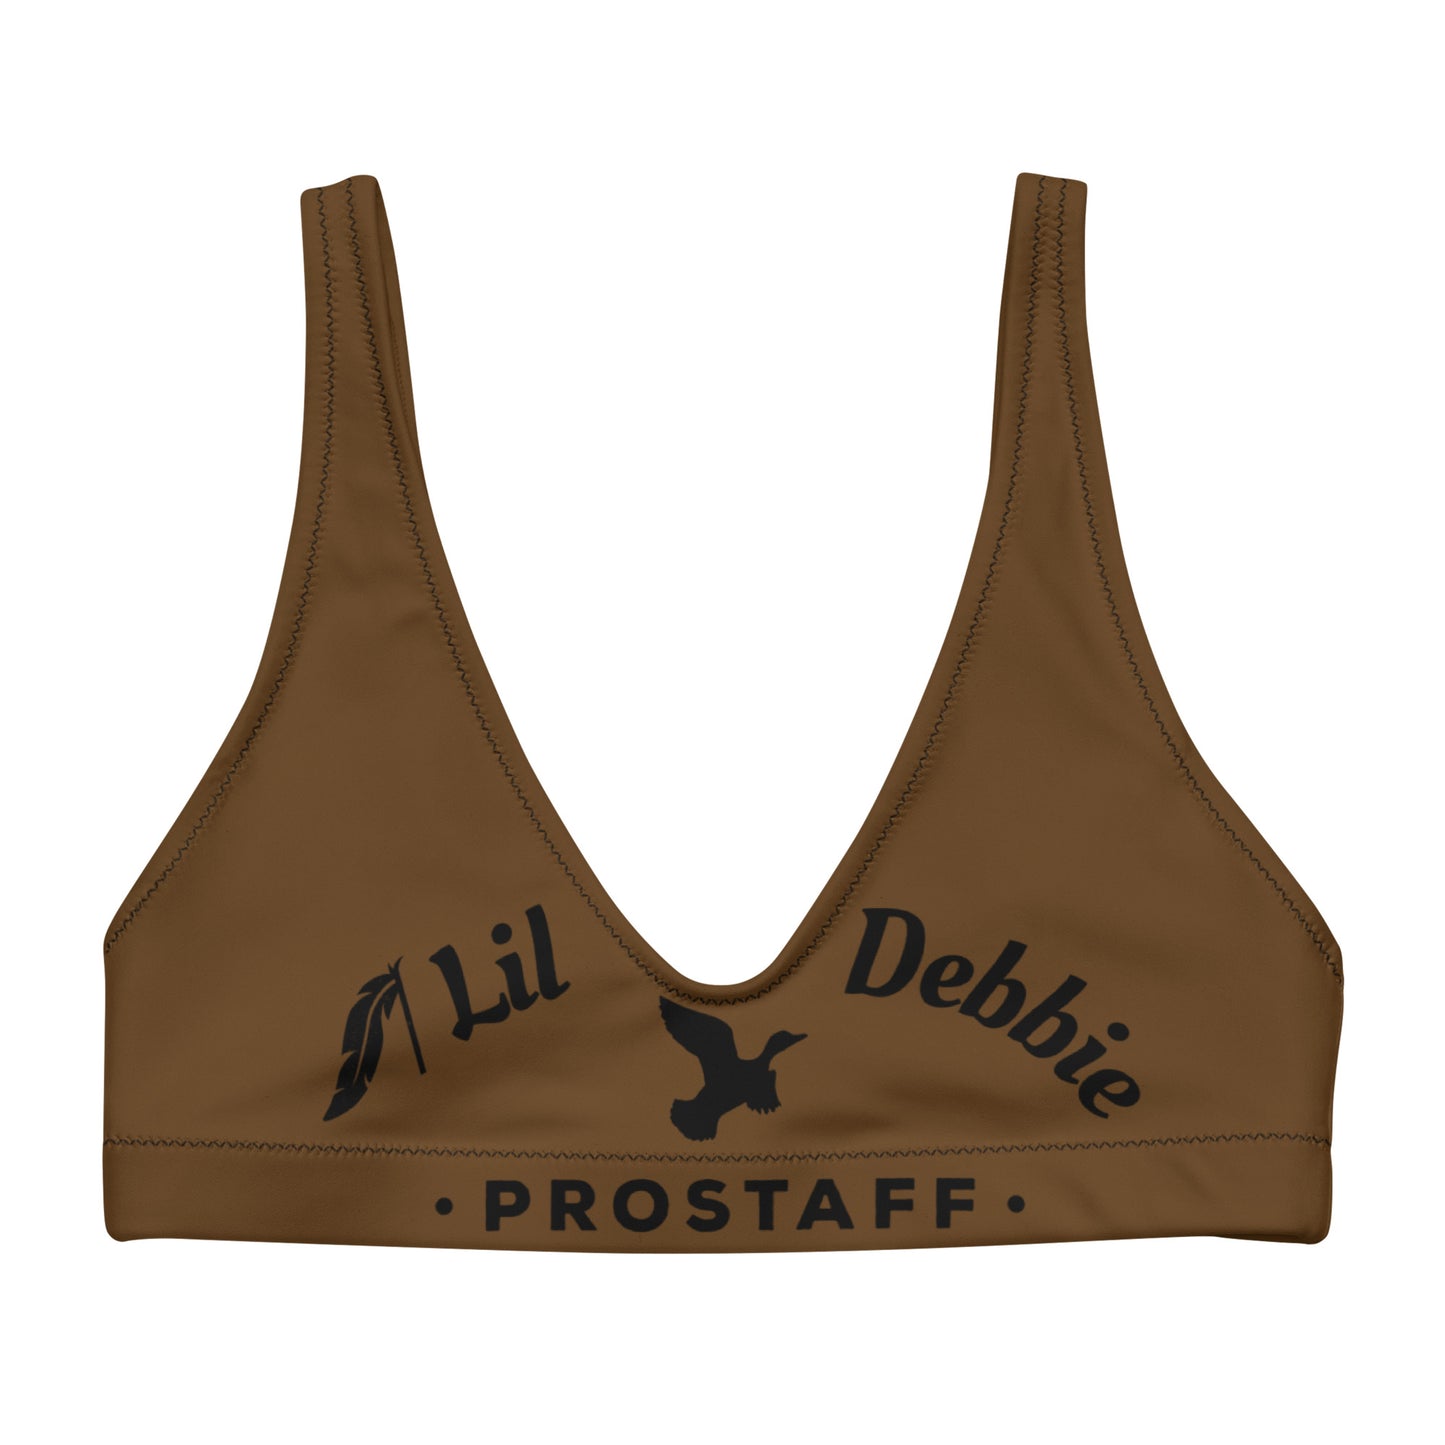 DH Lil' Debbie Prostaff Bikini Top in Brown/Black